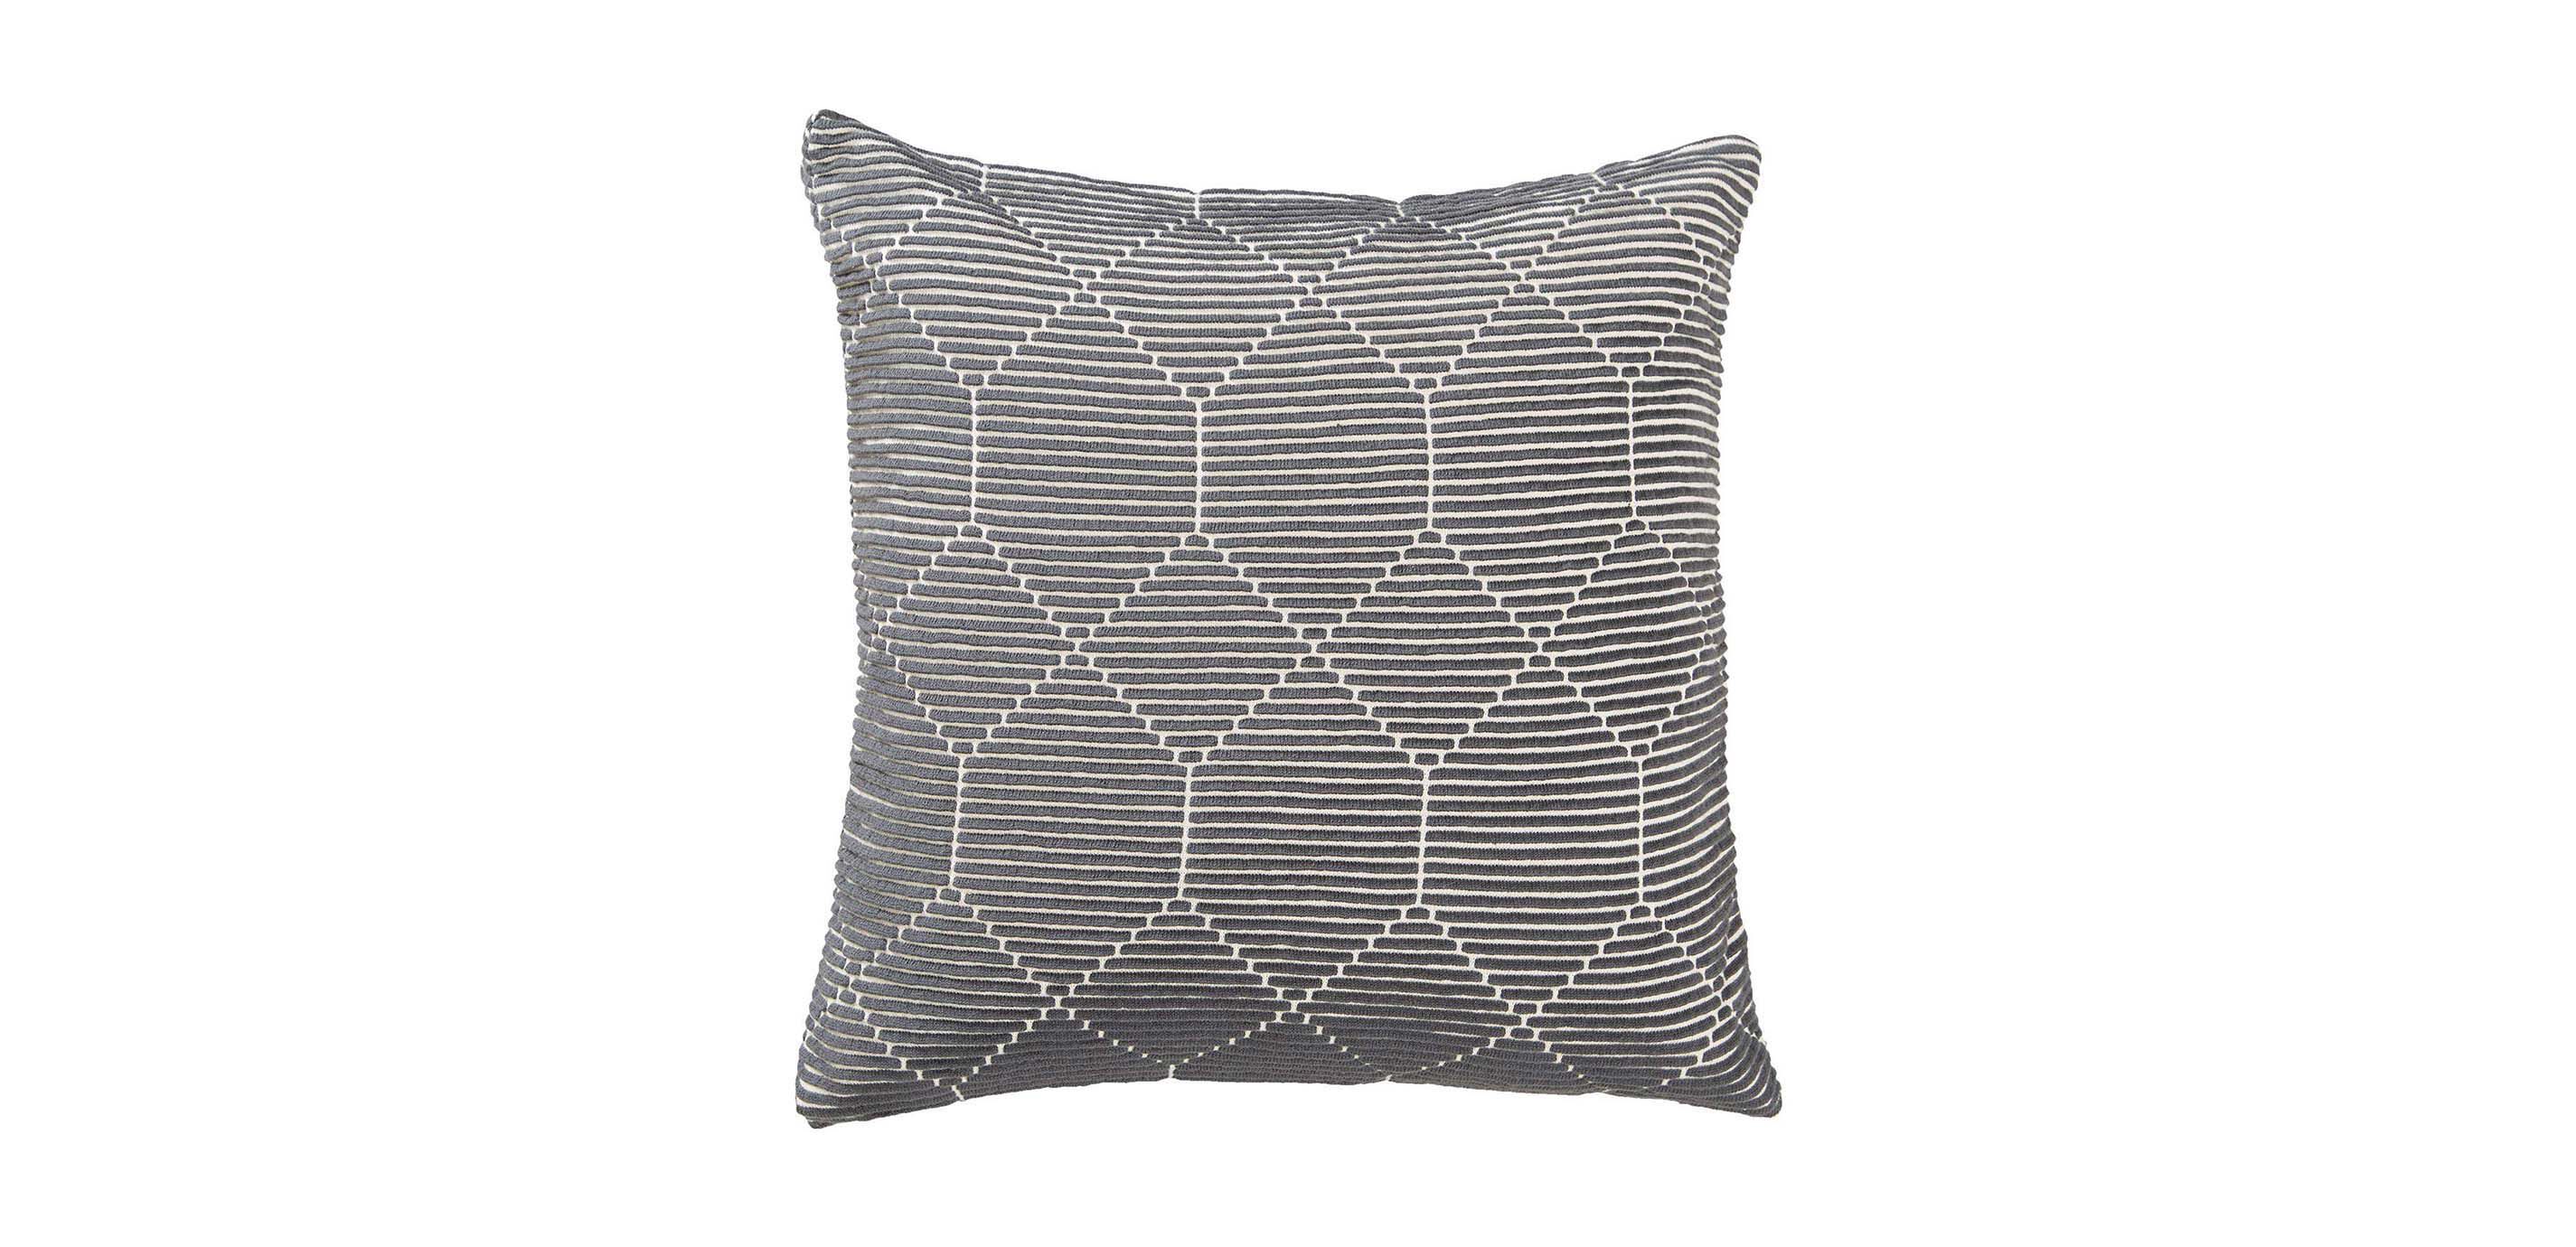 Hexagon-Pattern Gray Throw Pillows | Ethan Allen Throw Pillows